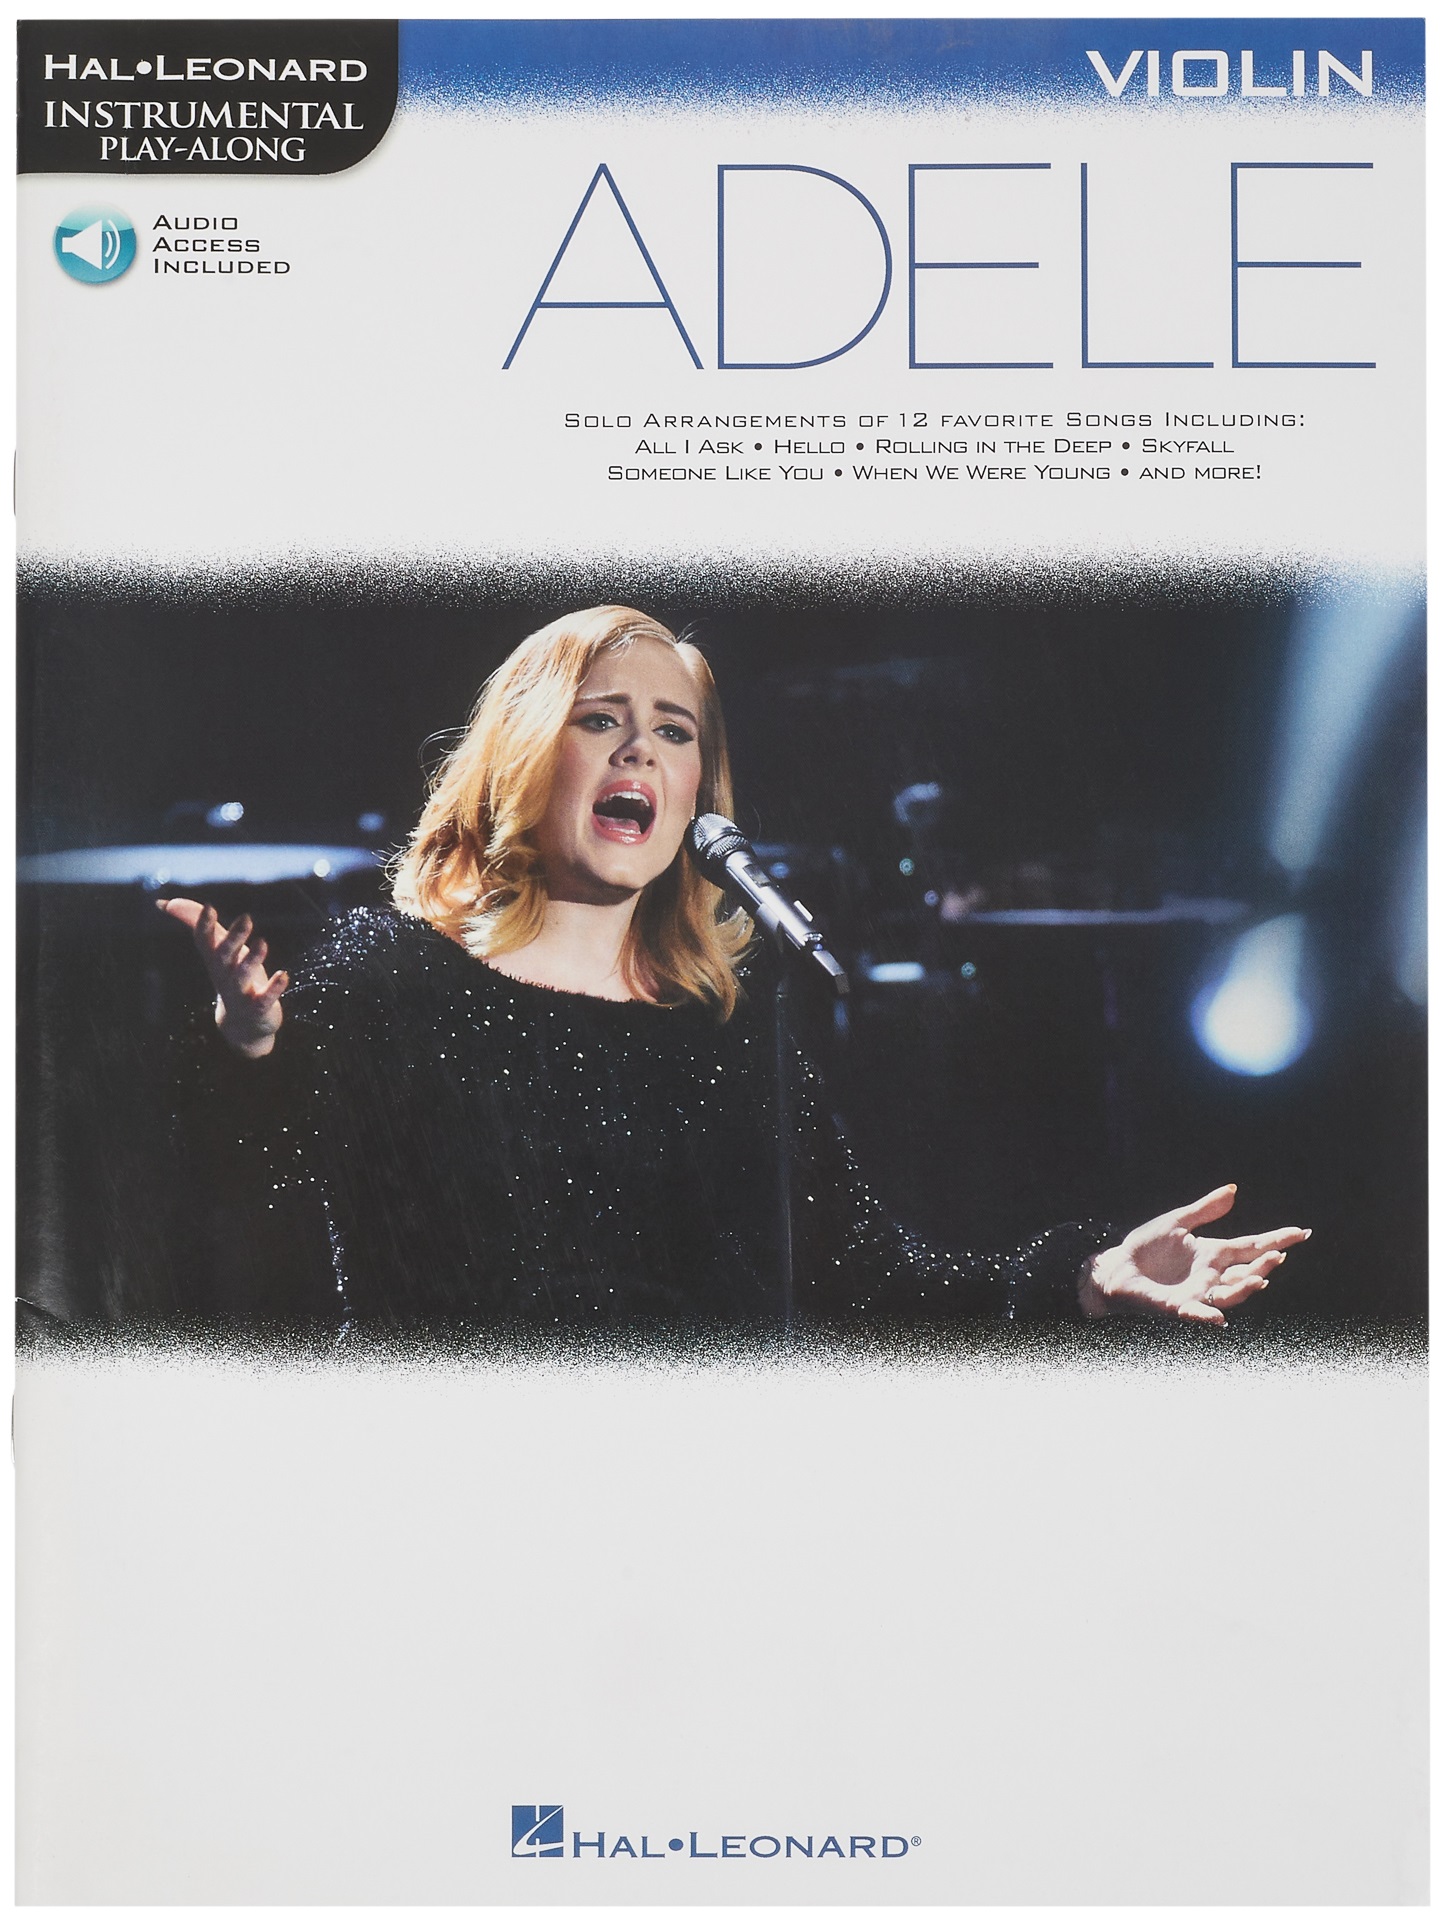 MS Hal Leonard Instrumental Play-Along: Adele - Violin